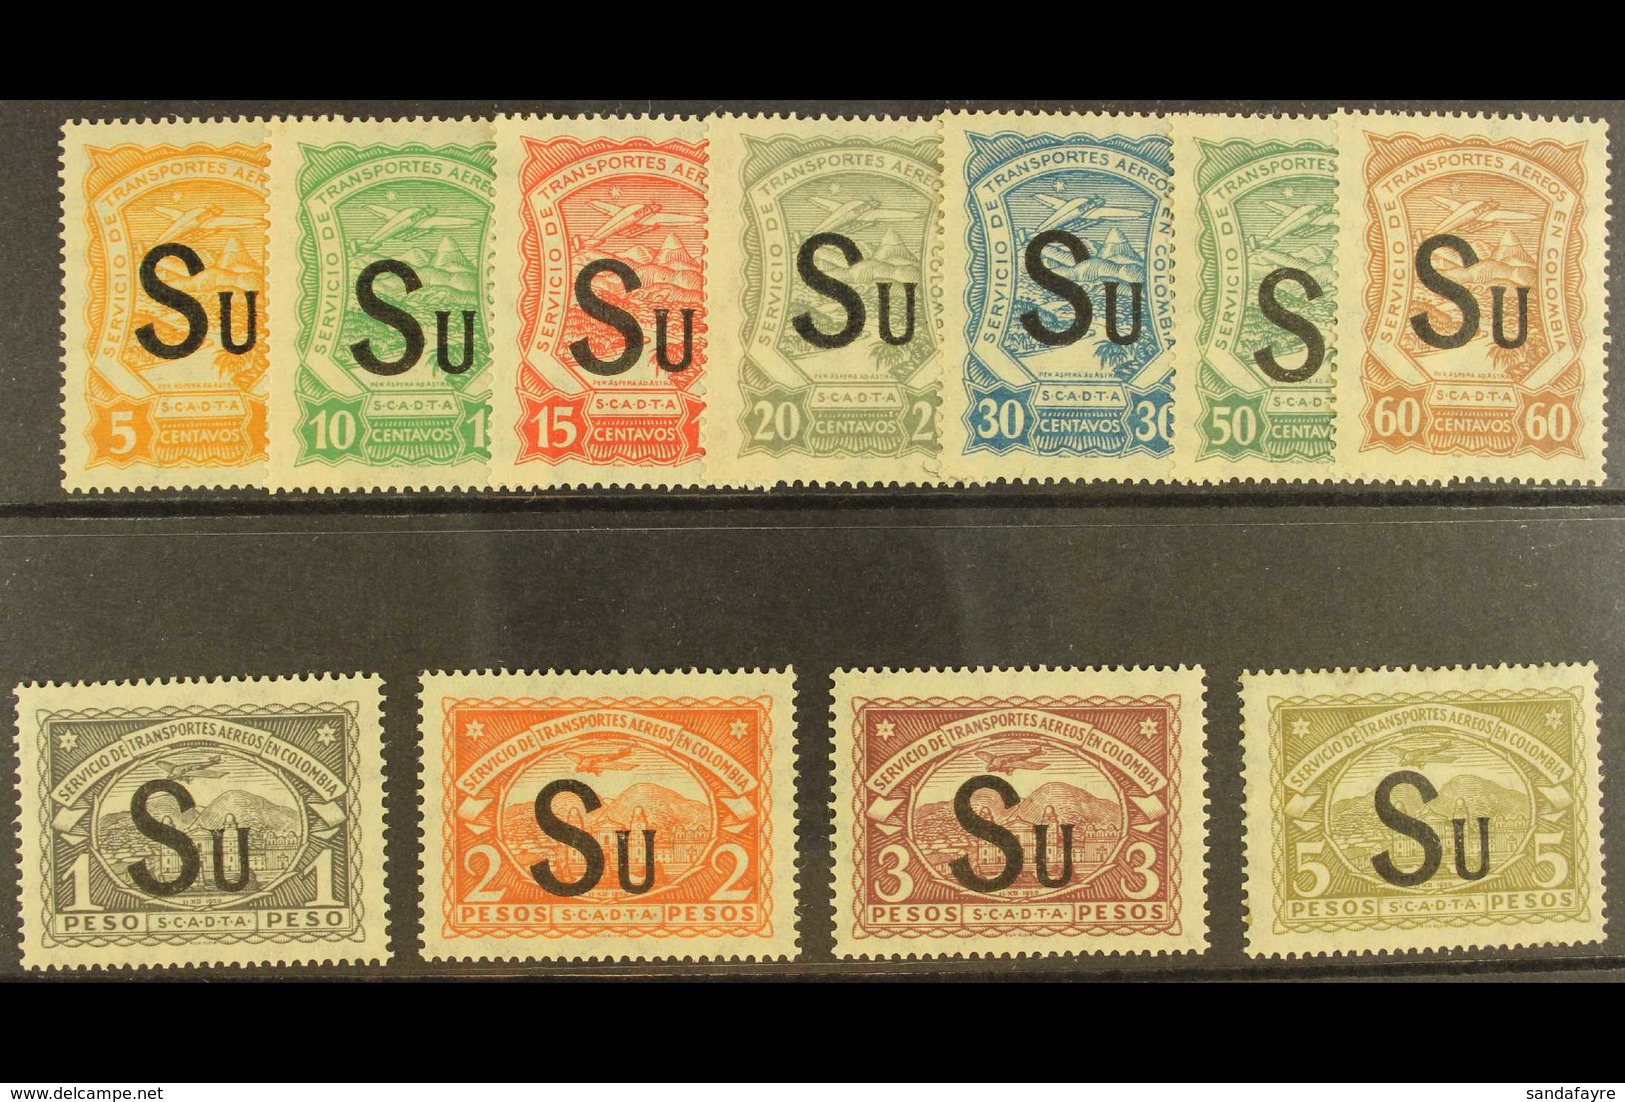 PRIVATE AIRS - SCADTA 1924 (10 Mar) "SU" Overprinted (for Sweden) Complete Set (SG 26M/36M, Scott CLSU1/11), Very Fine M - Kolumbien